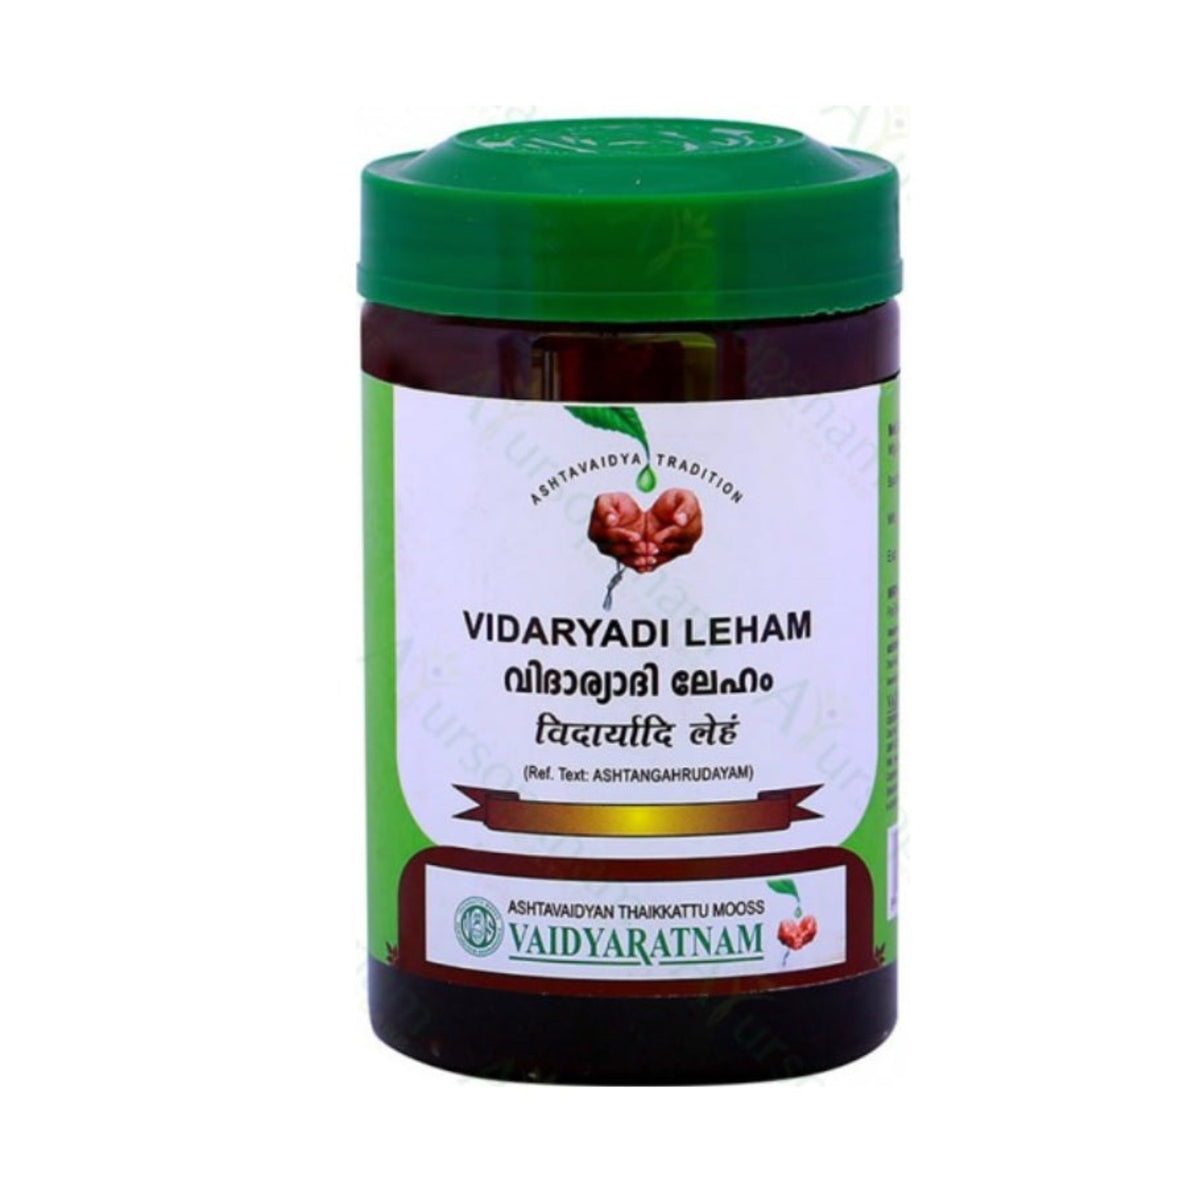 Vaidyaratnam Ayurvedisches Vidaryadi Leham Avaleh 500g